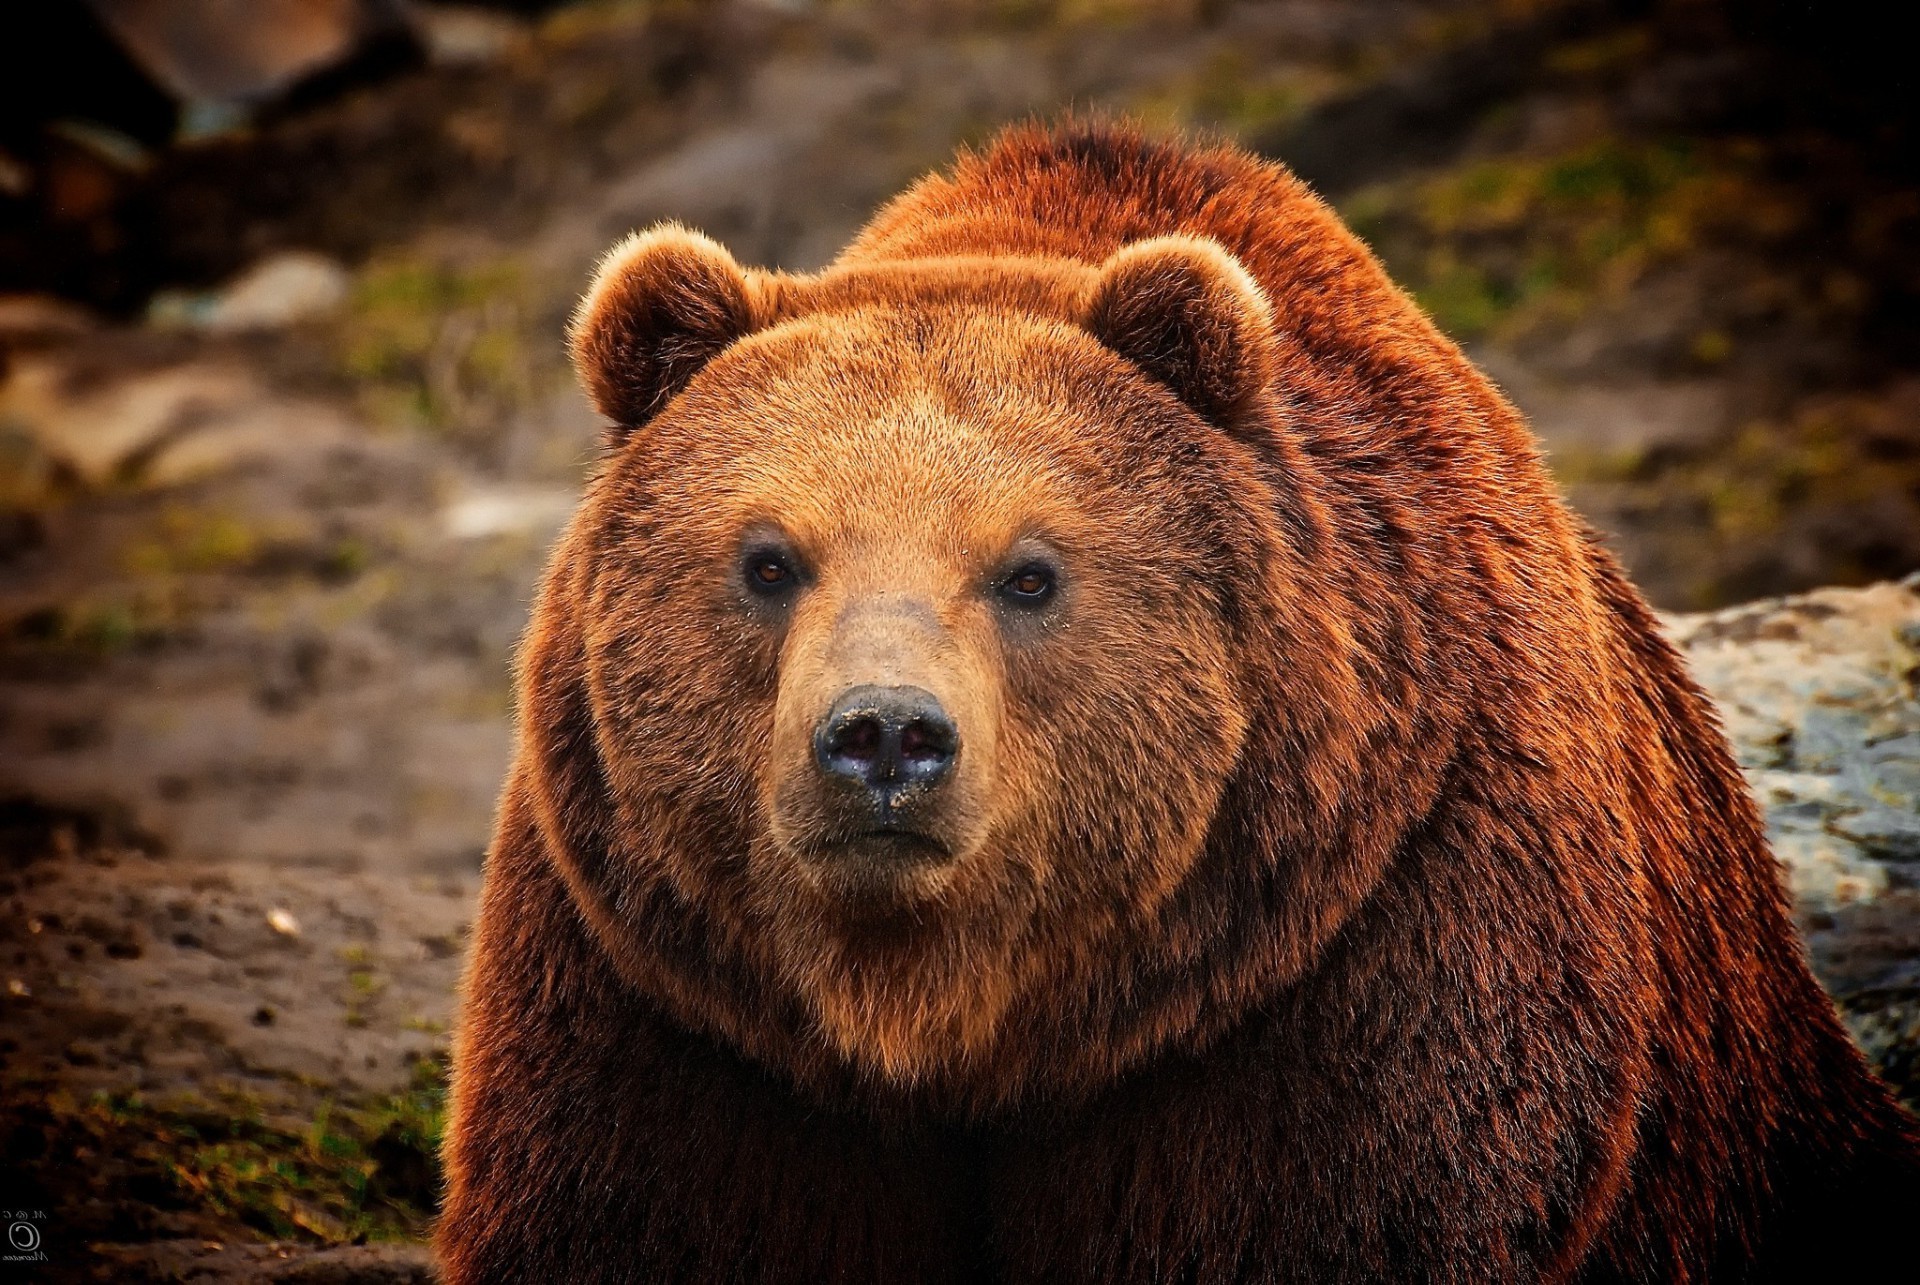 bears wildlife mammal nature predator wild grizzly fur animal outdoors danger